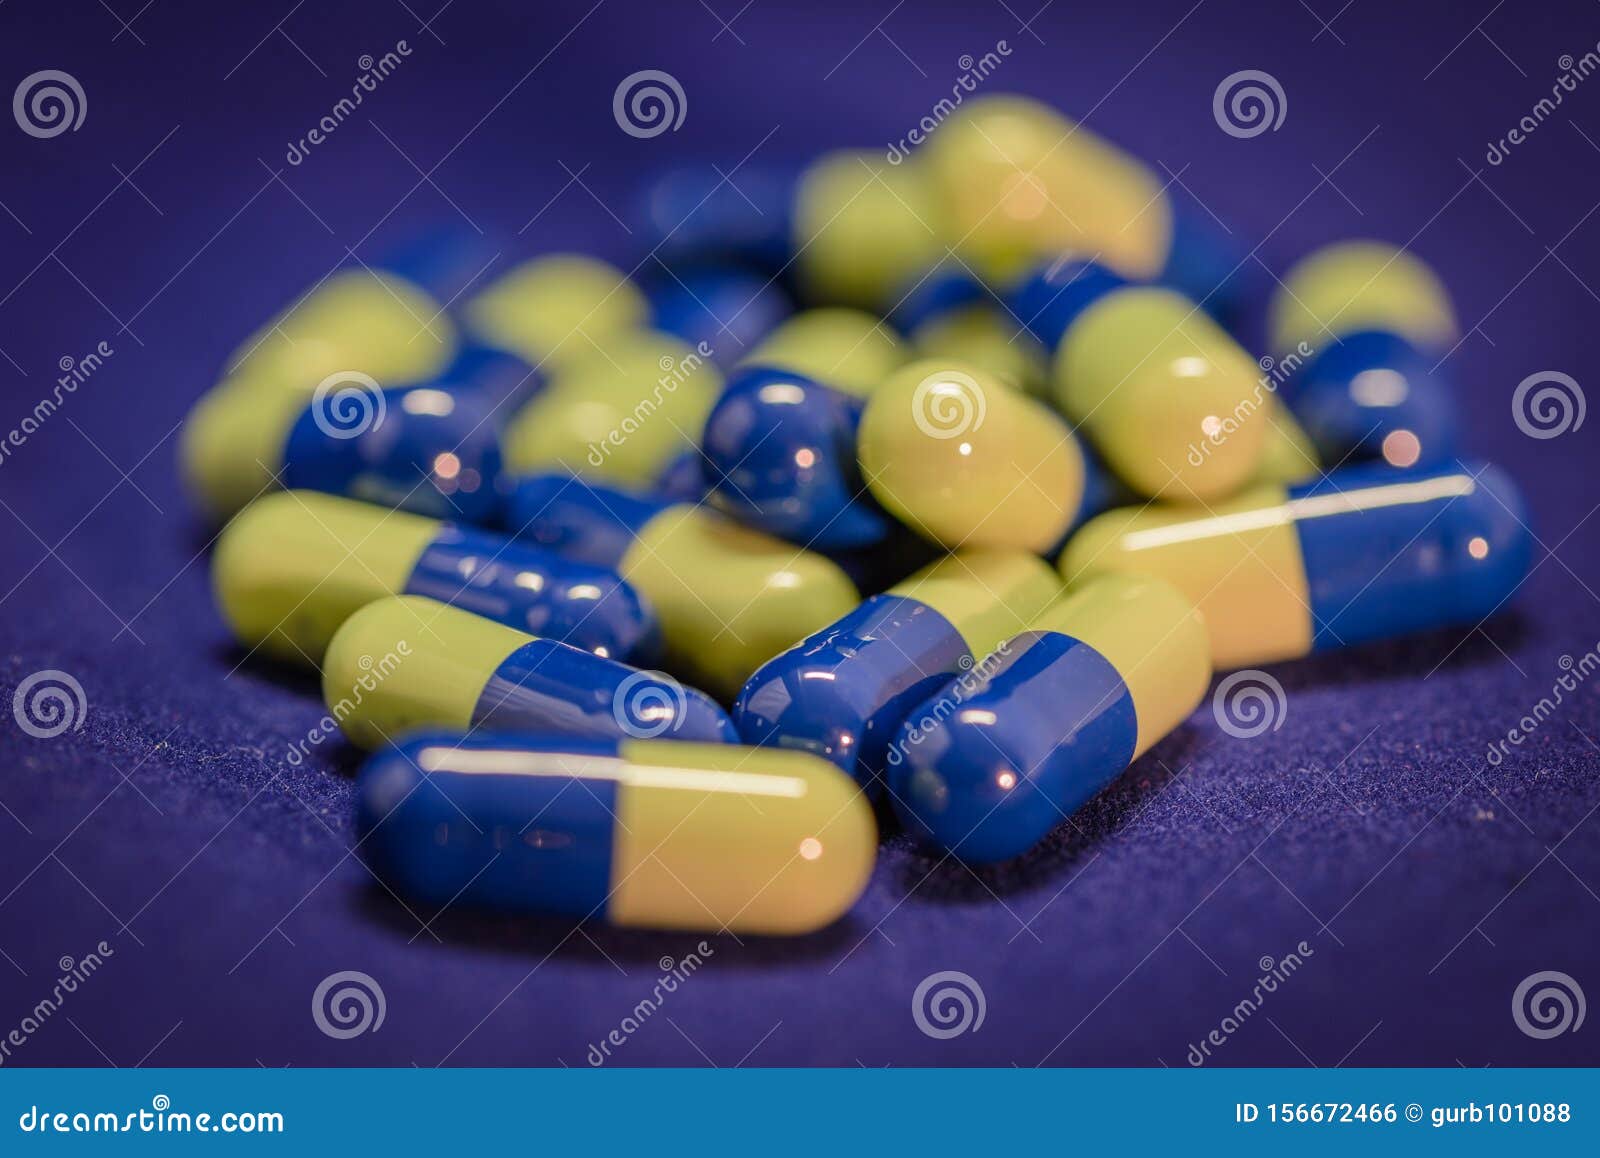 Blue and yellow capsules stock photo. Image of antibiotic 156672466